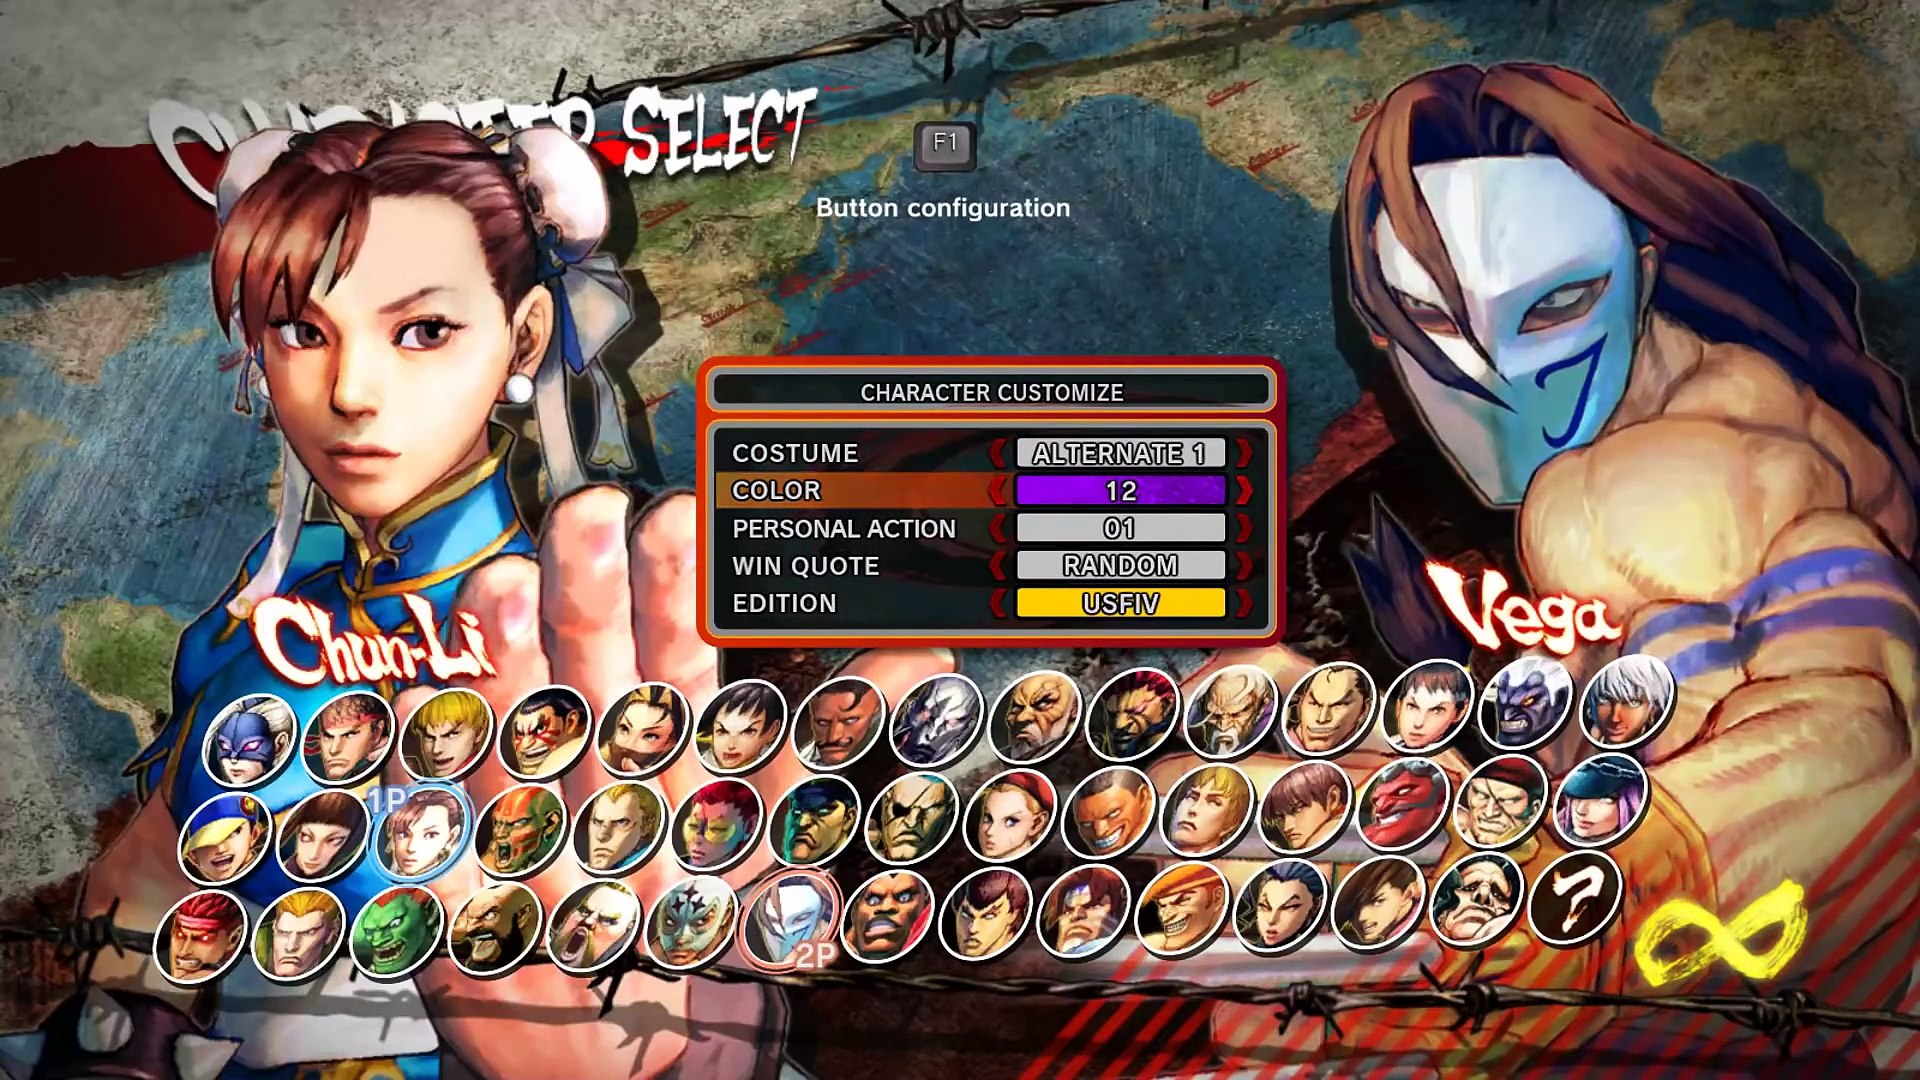 Chun Li vs. Vega Diorama (Street Fighter 4)